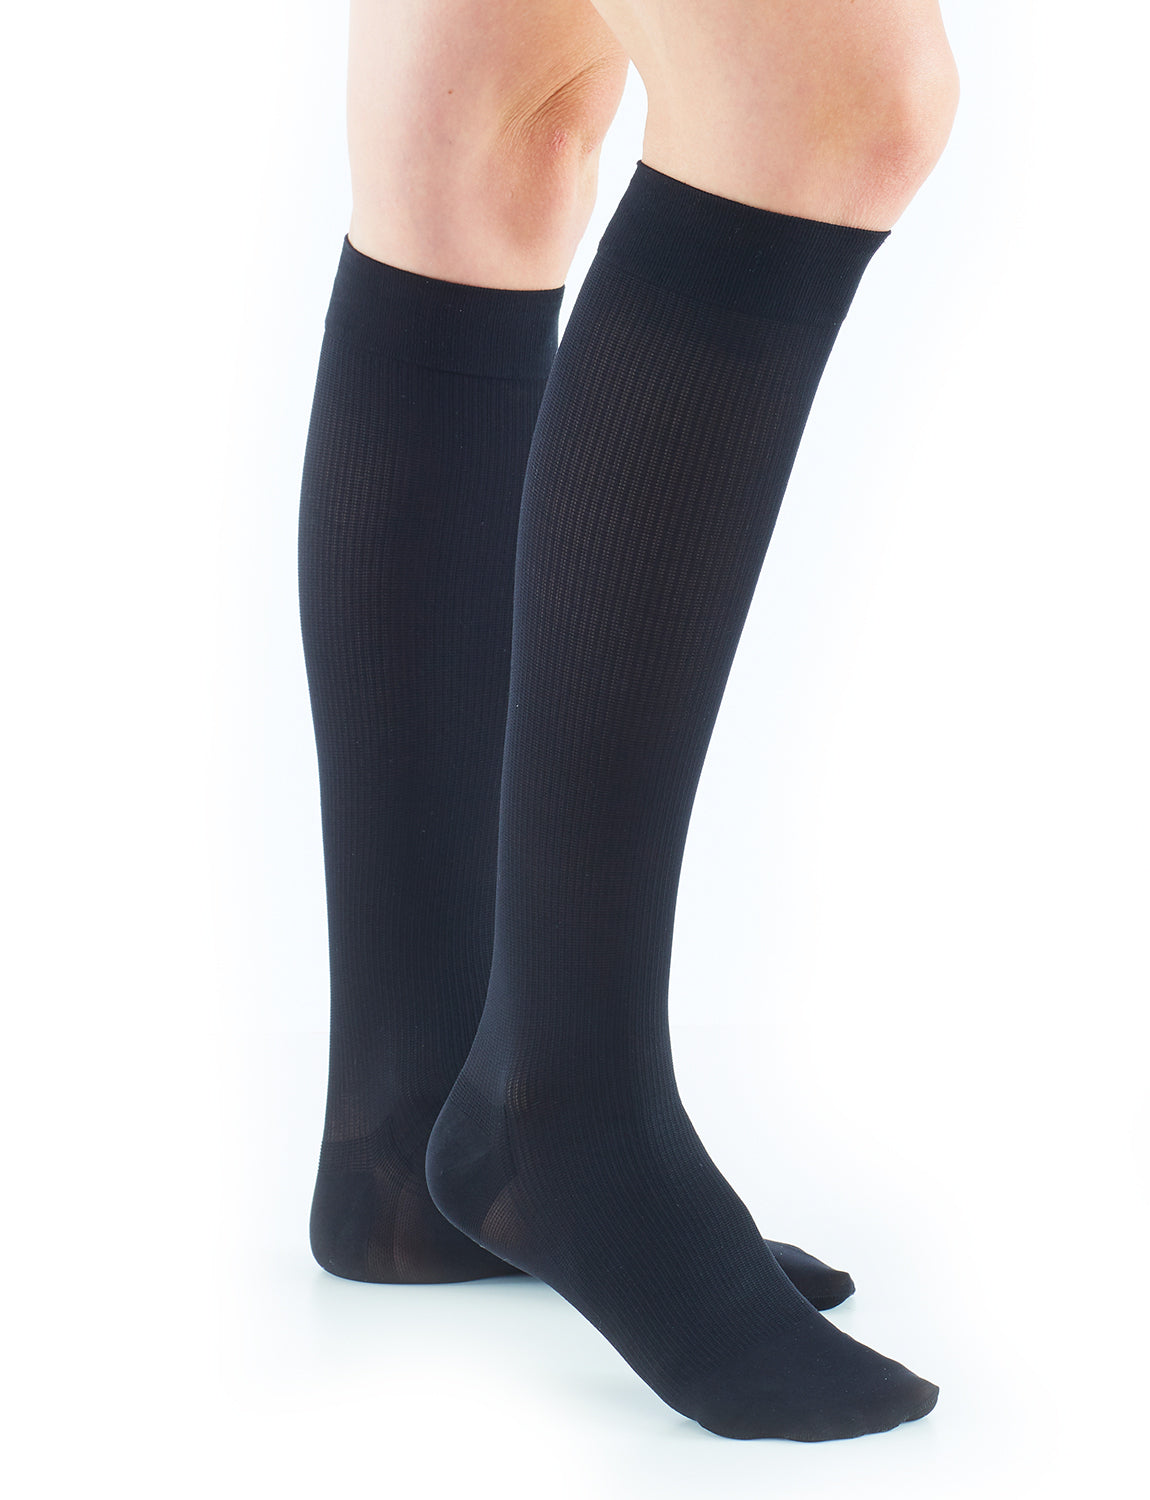 Heat Holders Men's Black Worxx Socks With Reinforced Heel and Toe –